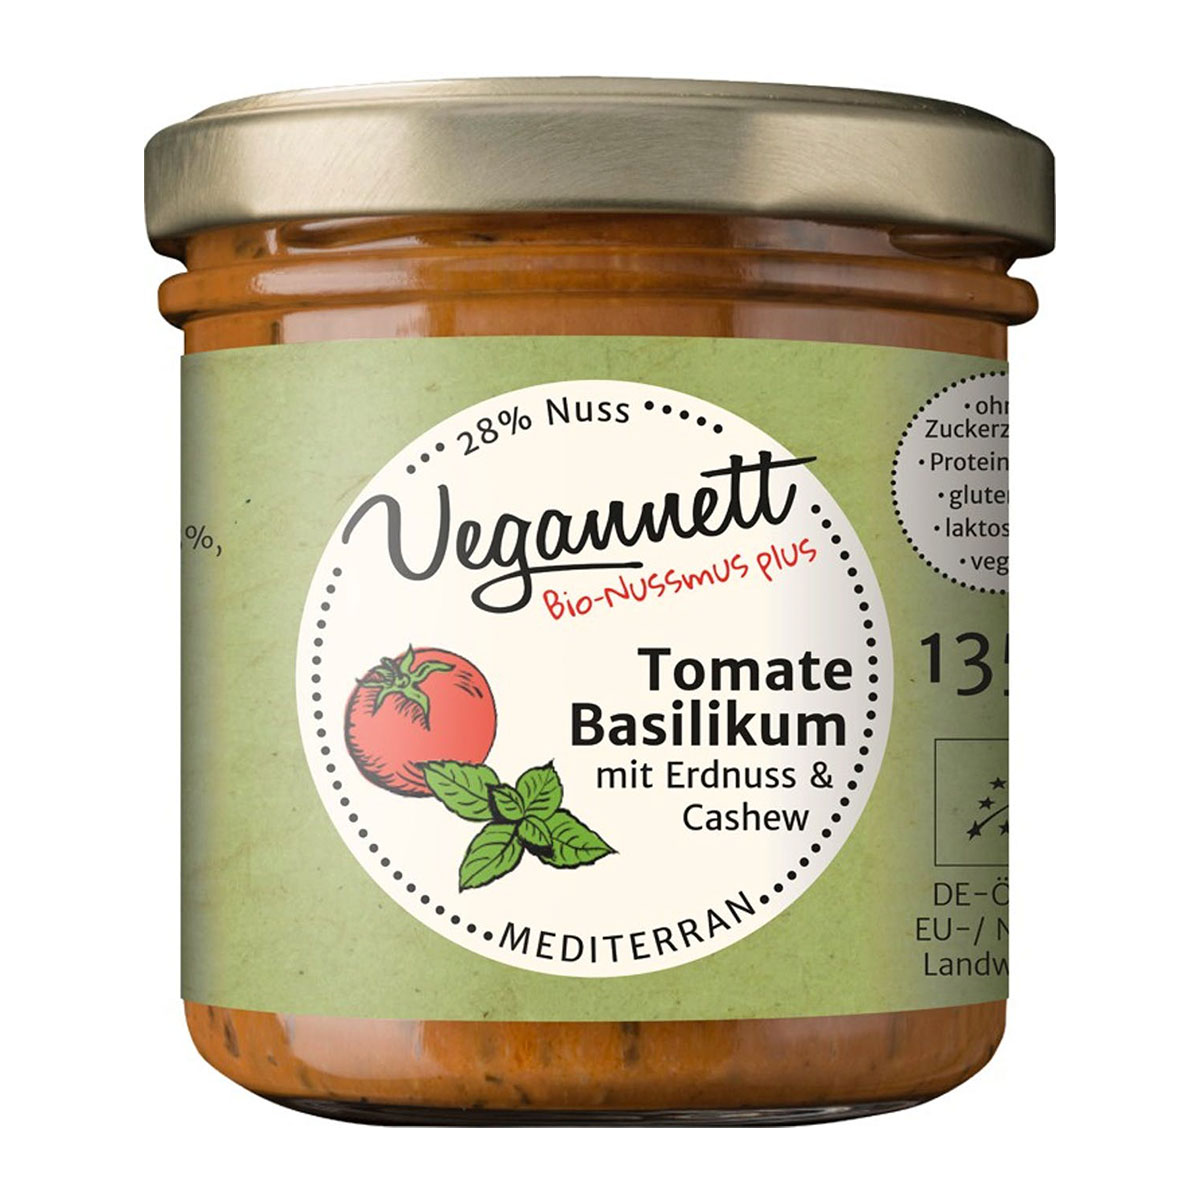 Veganes Bio-Nussmus - Tomate Basilikum - Vegannett